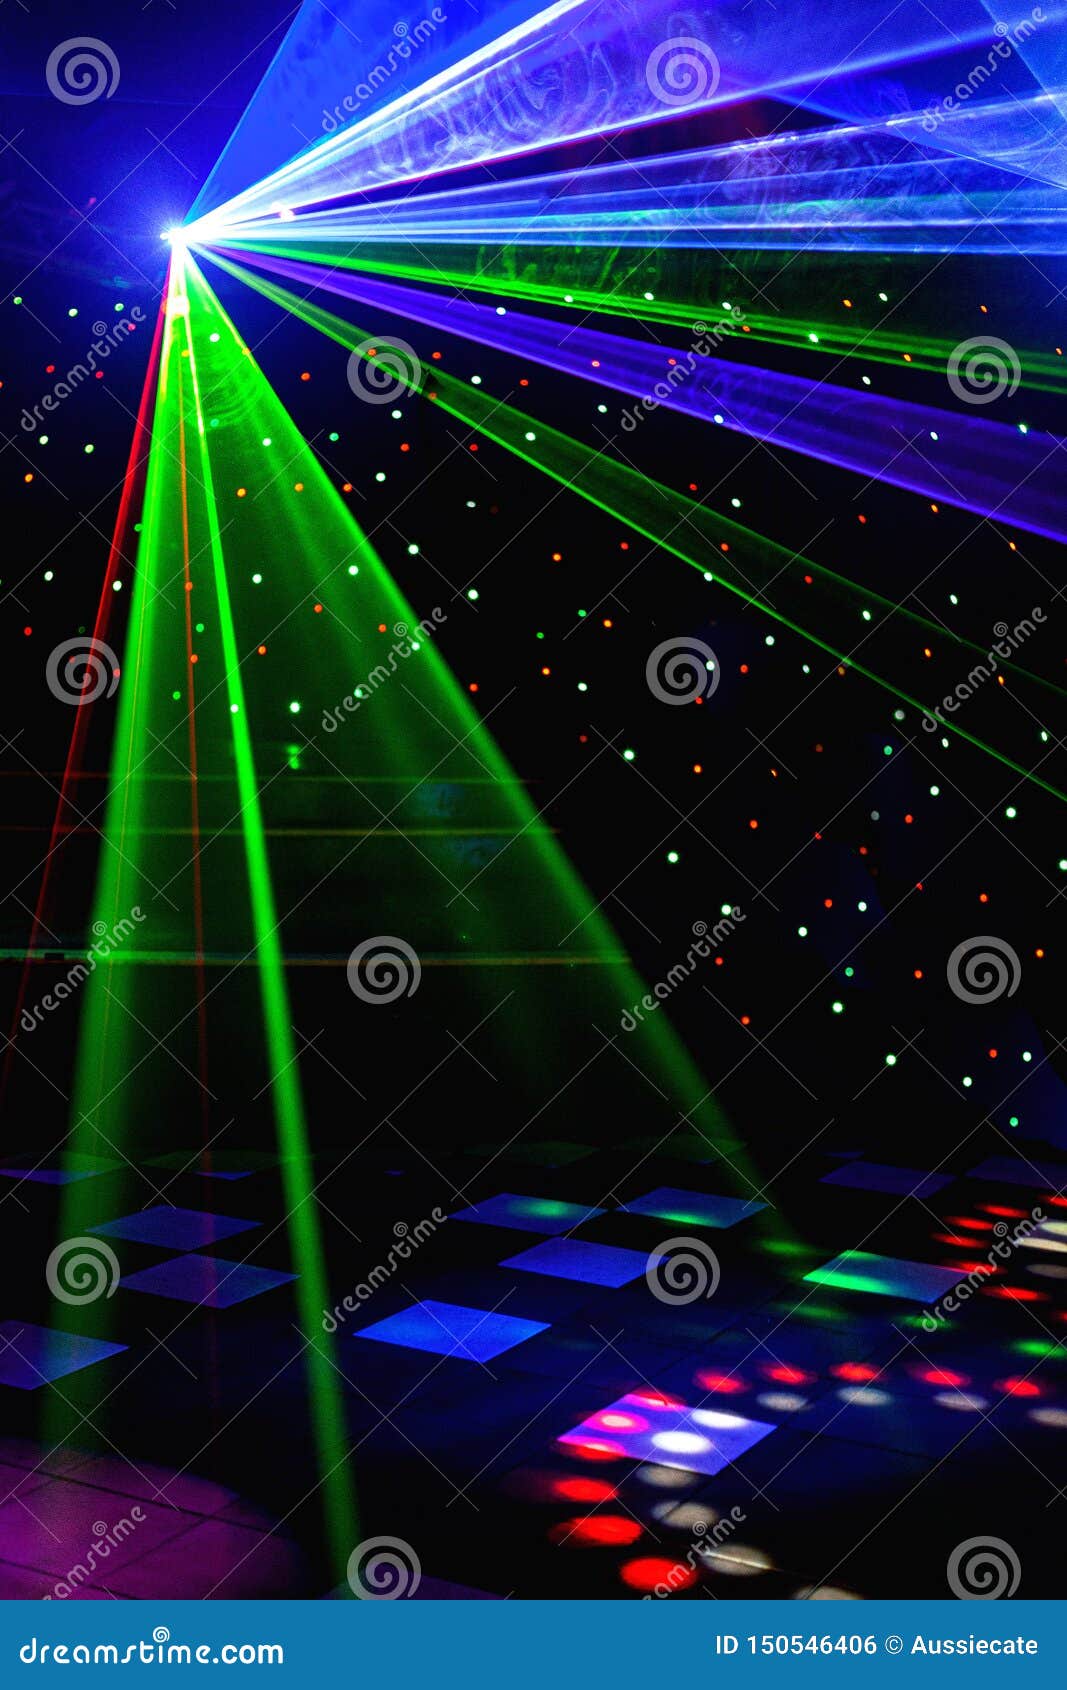 bright nightclub red, green, purple, white, pink, blue laser lights cutting through smoke machine smoke making light and rainbow